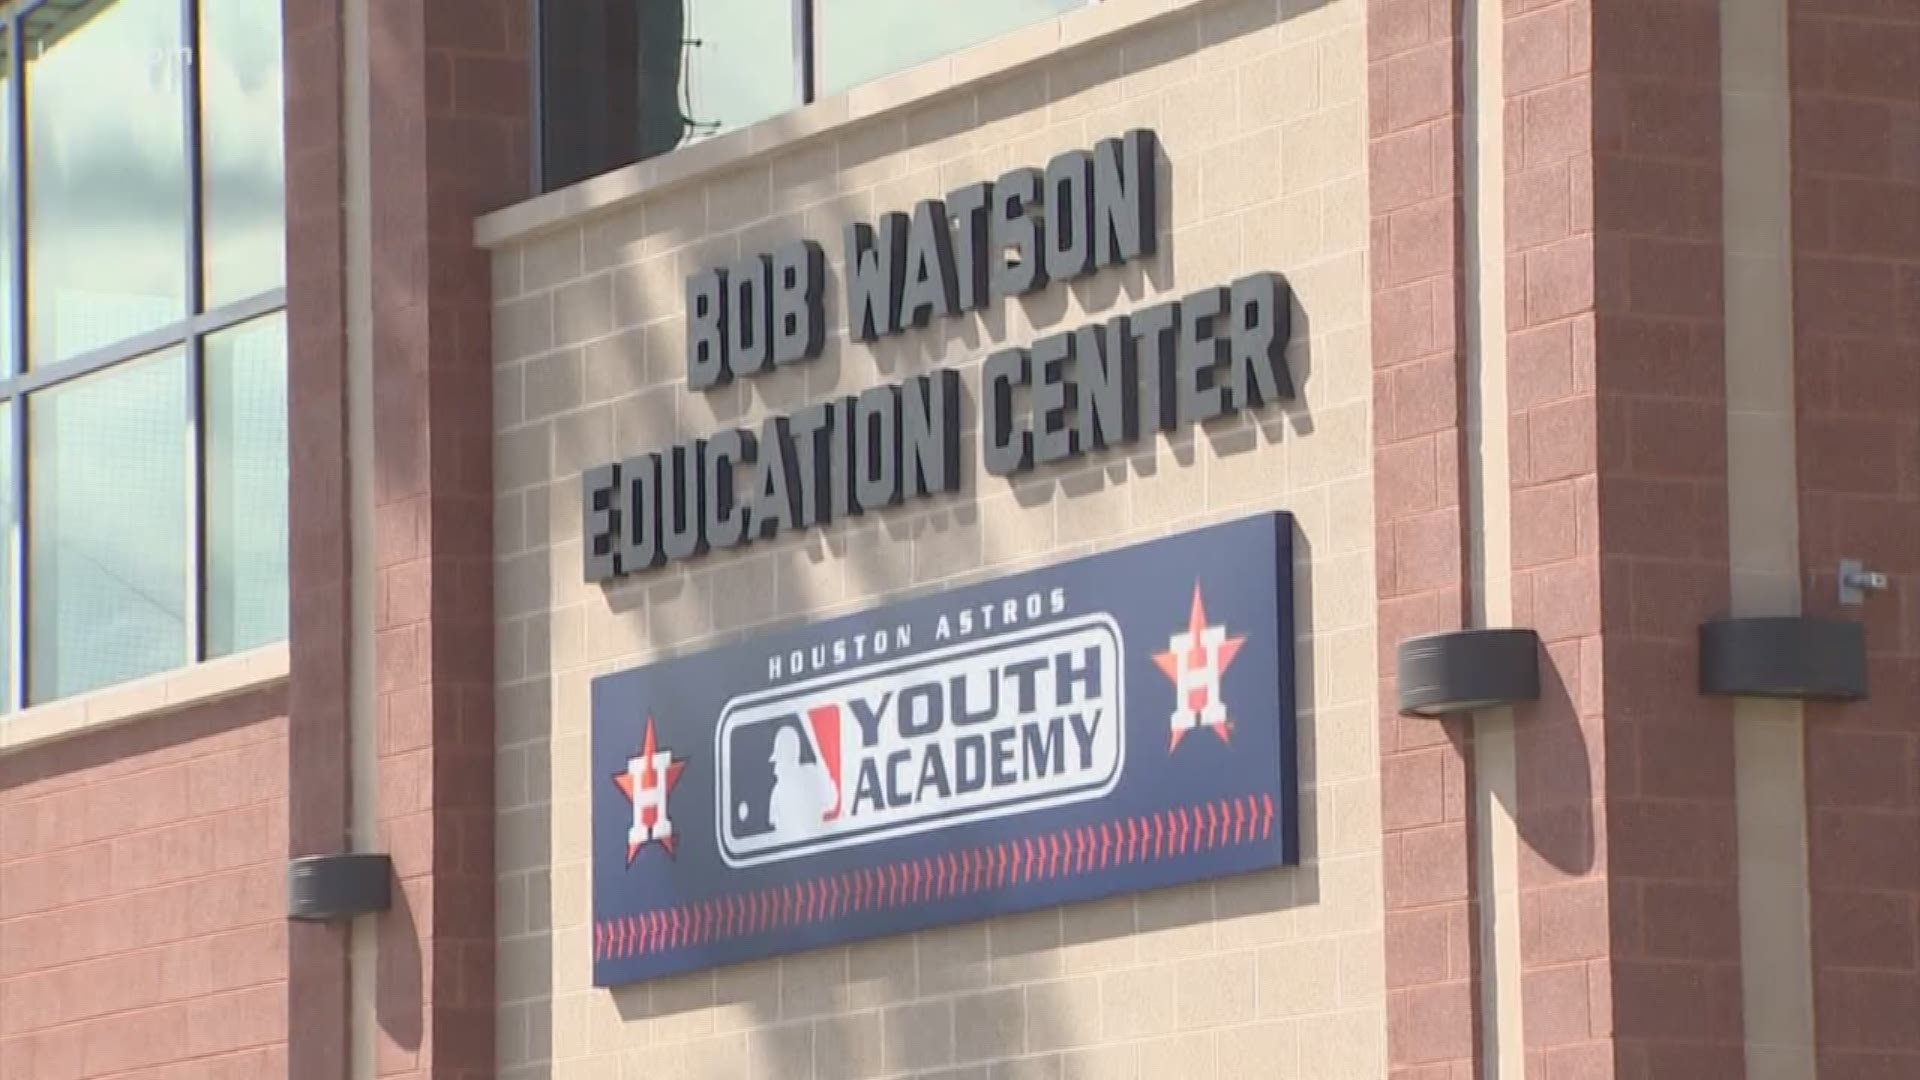 Astros honor Bob Watson by dedicating building at northwest Houston academy.